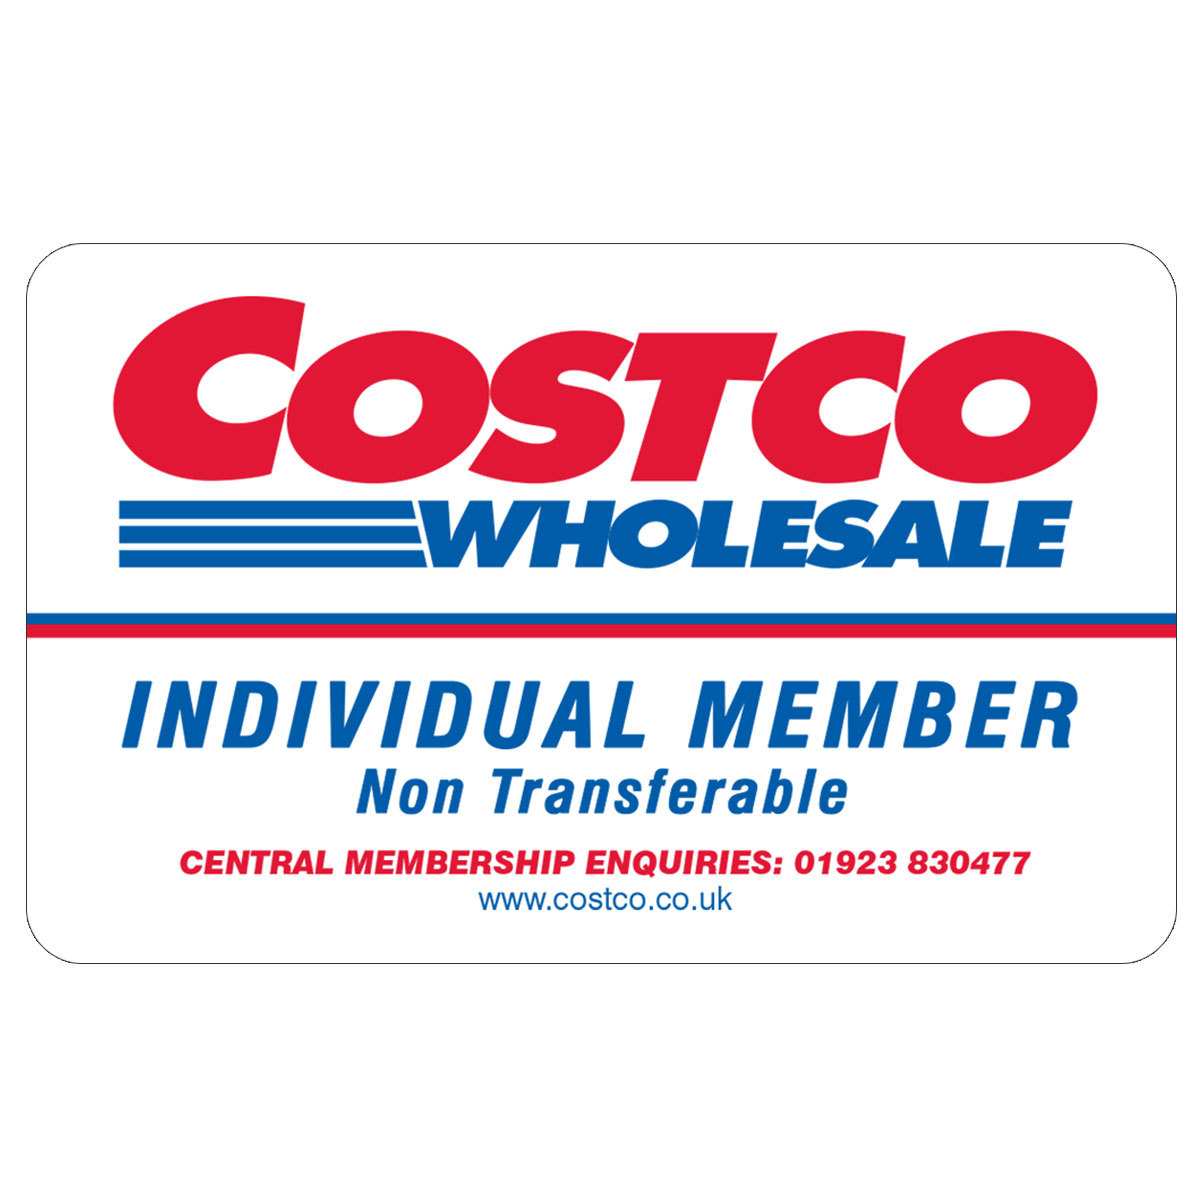 Warehouse Individual Membership